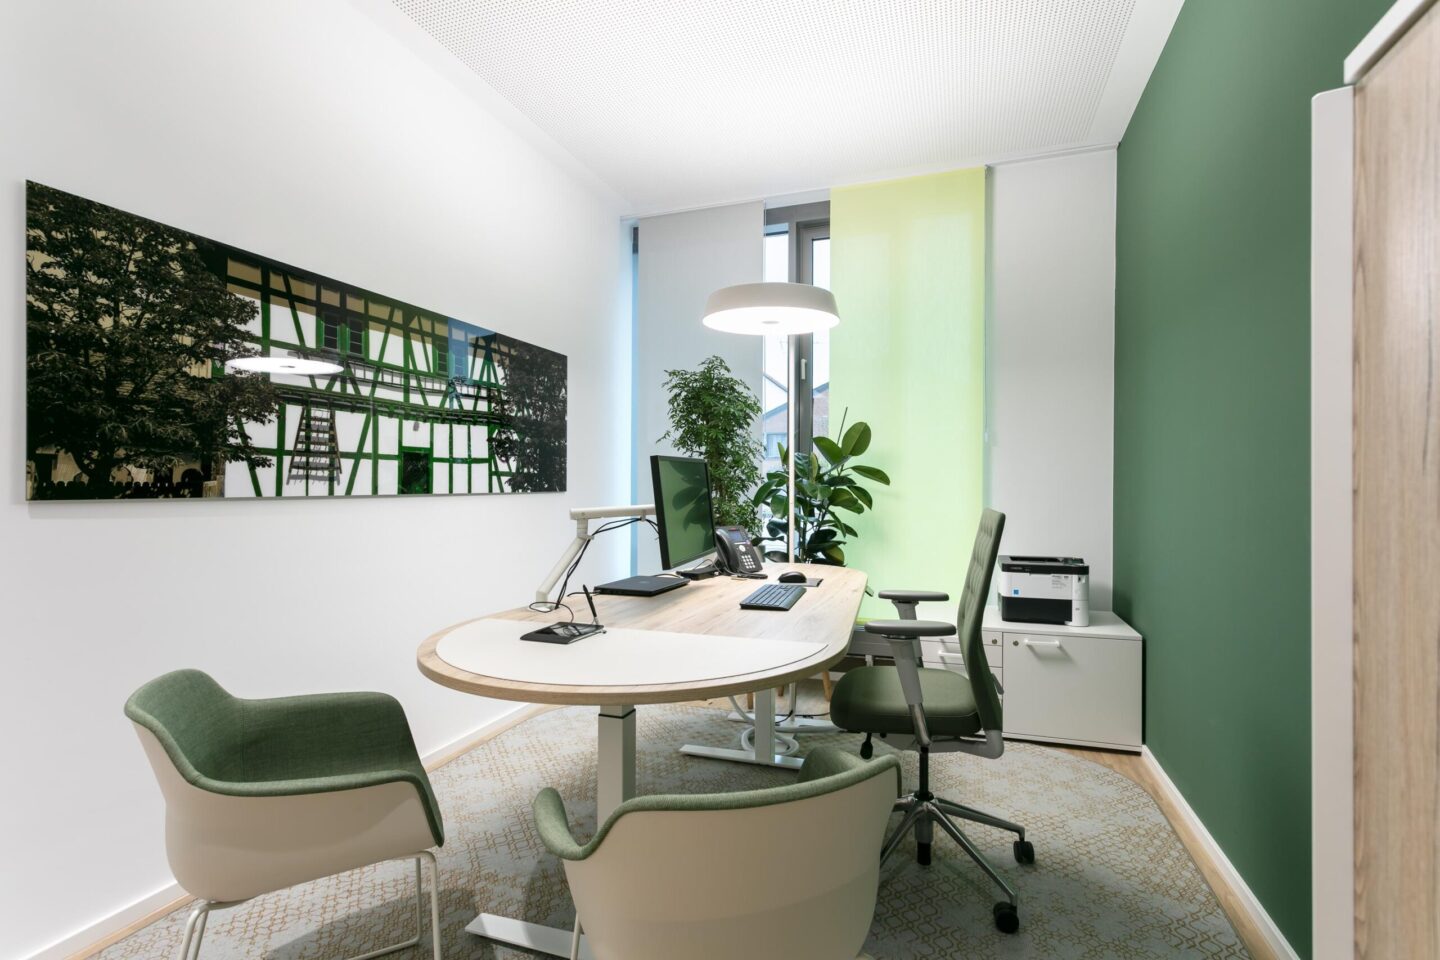 Sparkasse-Blankenloch │ modern working environments │ consultant room